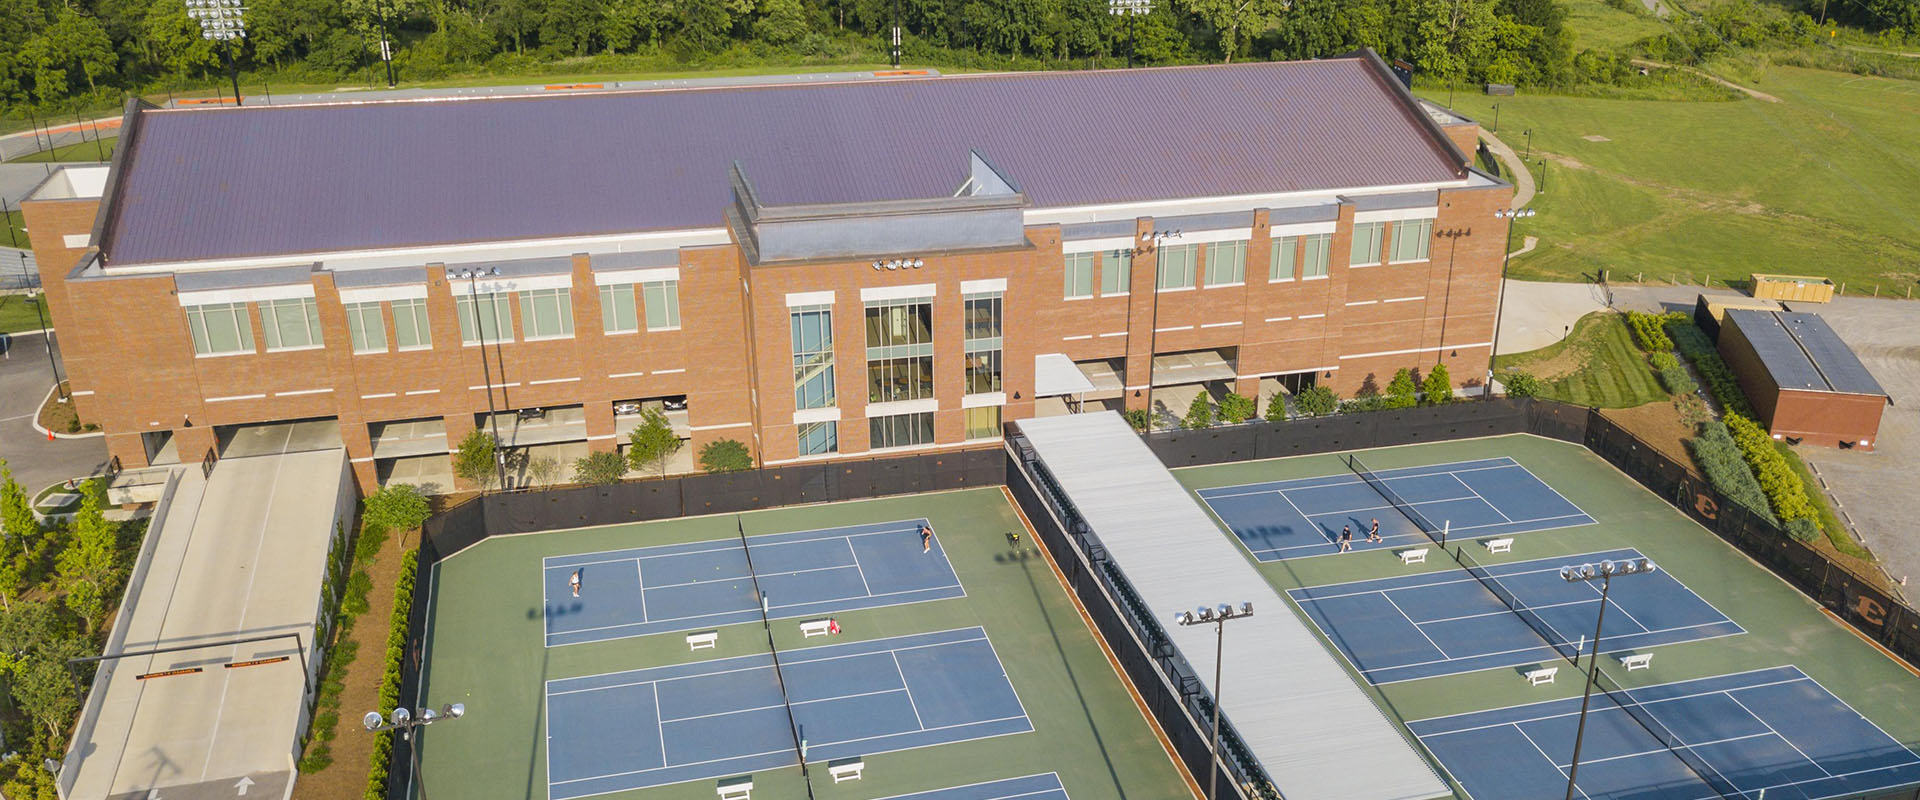 Ensworth Tennis Center